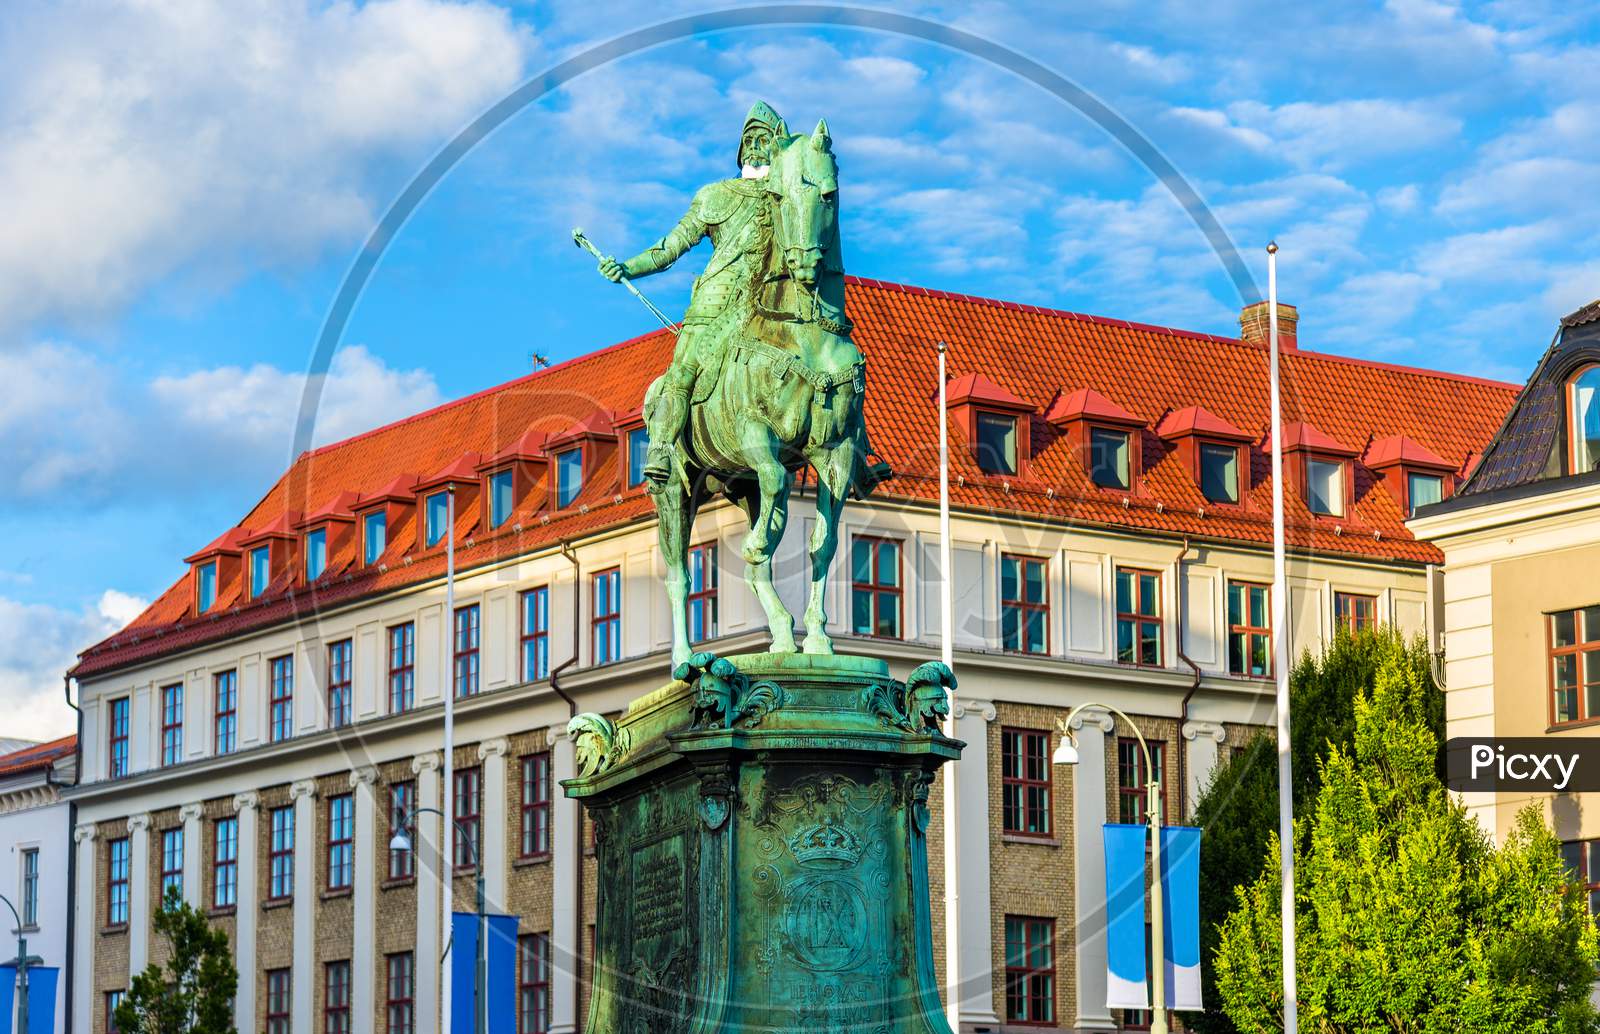 Equestrian Statue Of King Karl Ix In Gothenburg